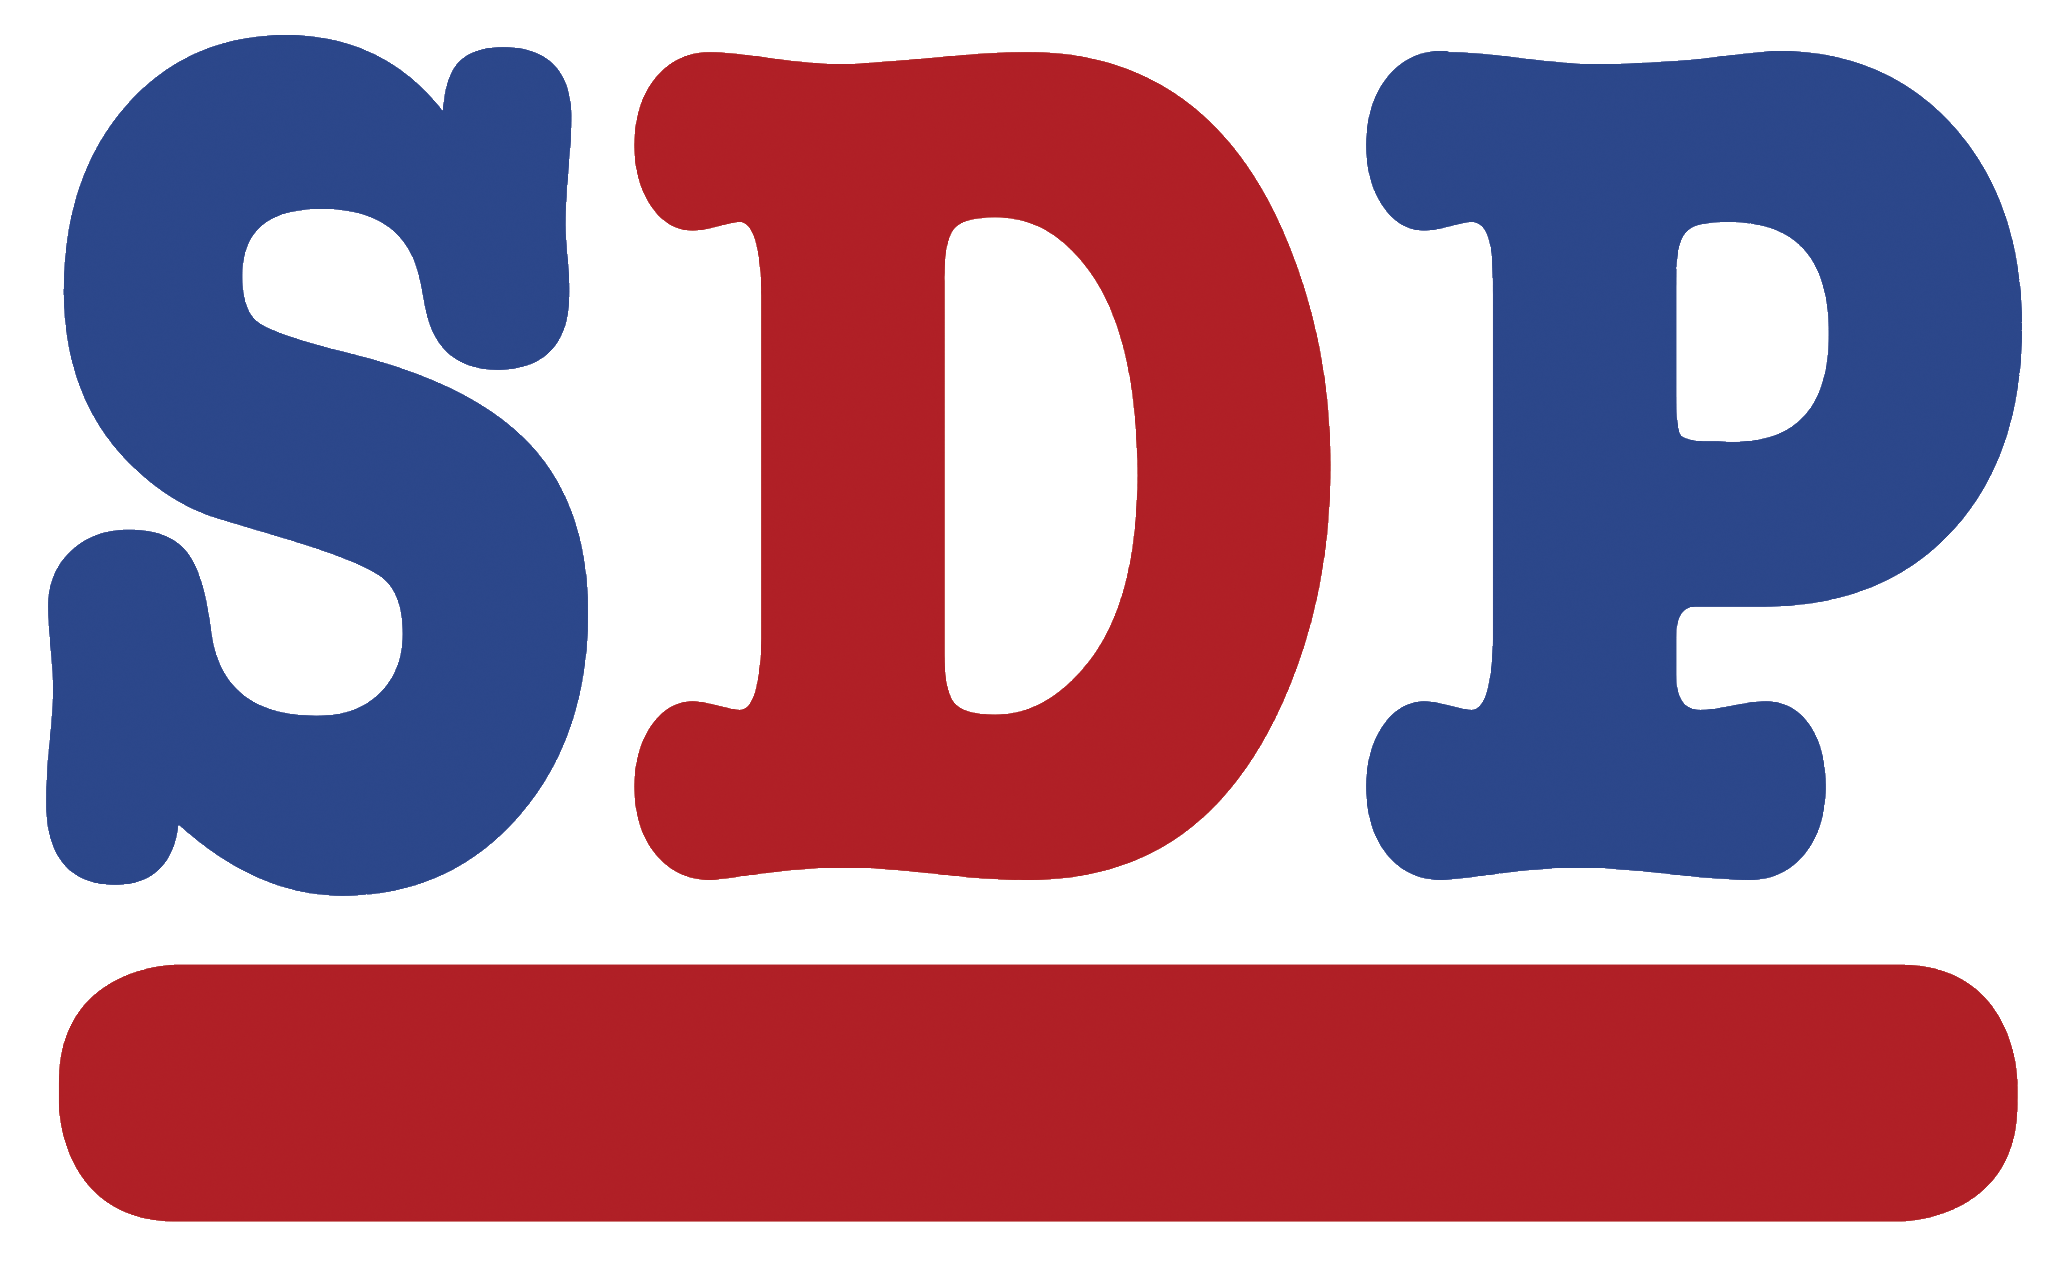 SDP Logo - File:SDP Logo.png - Wikimedia Commons